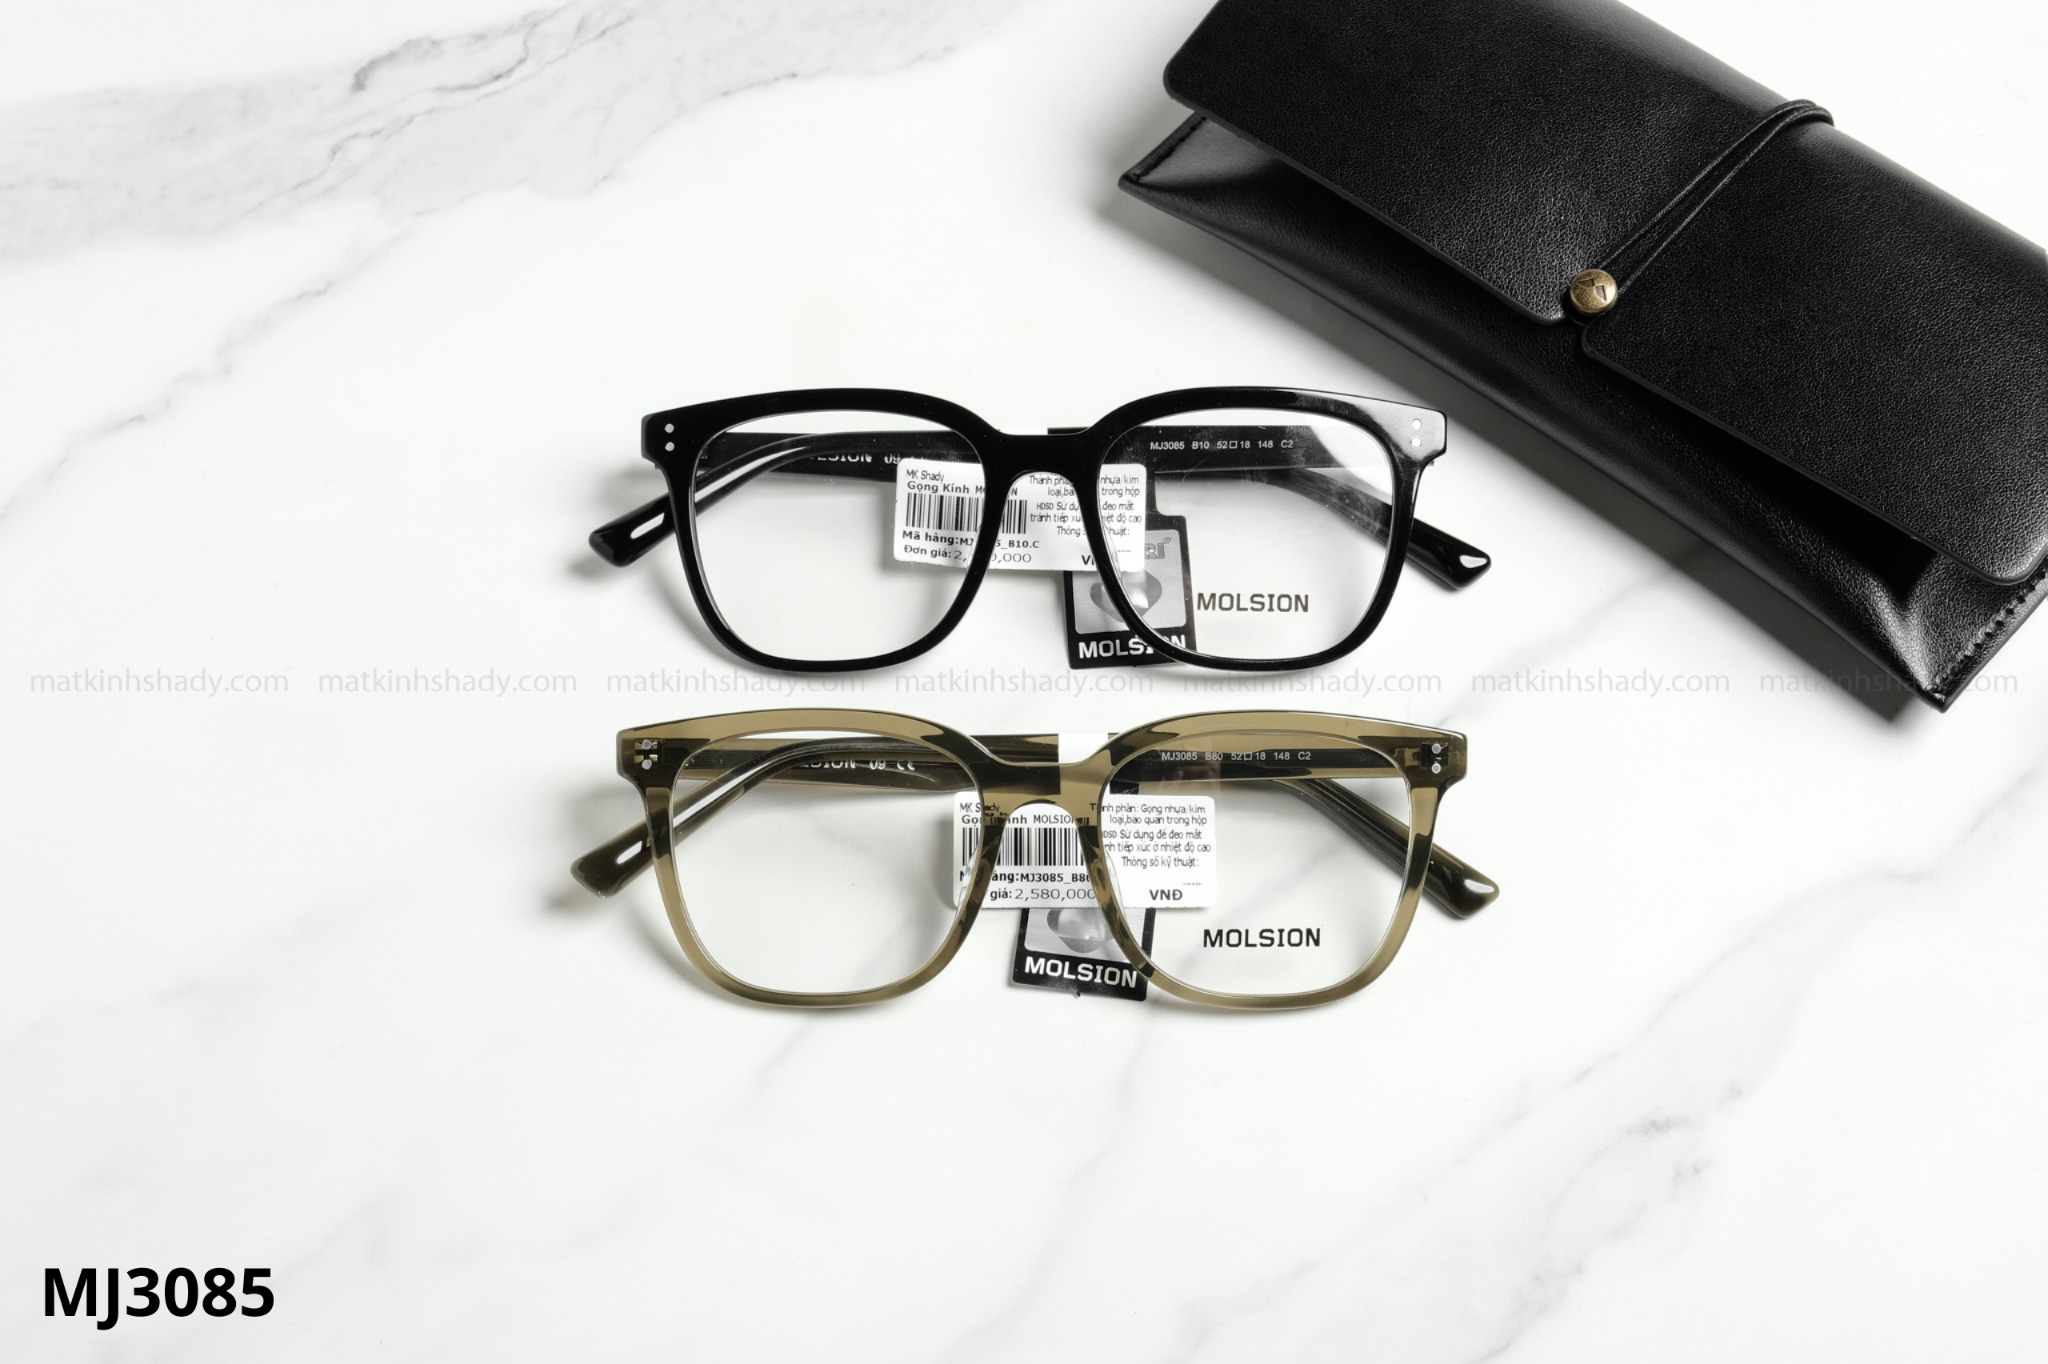  Molsion Eyewear - Glasses - MJ3085 